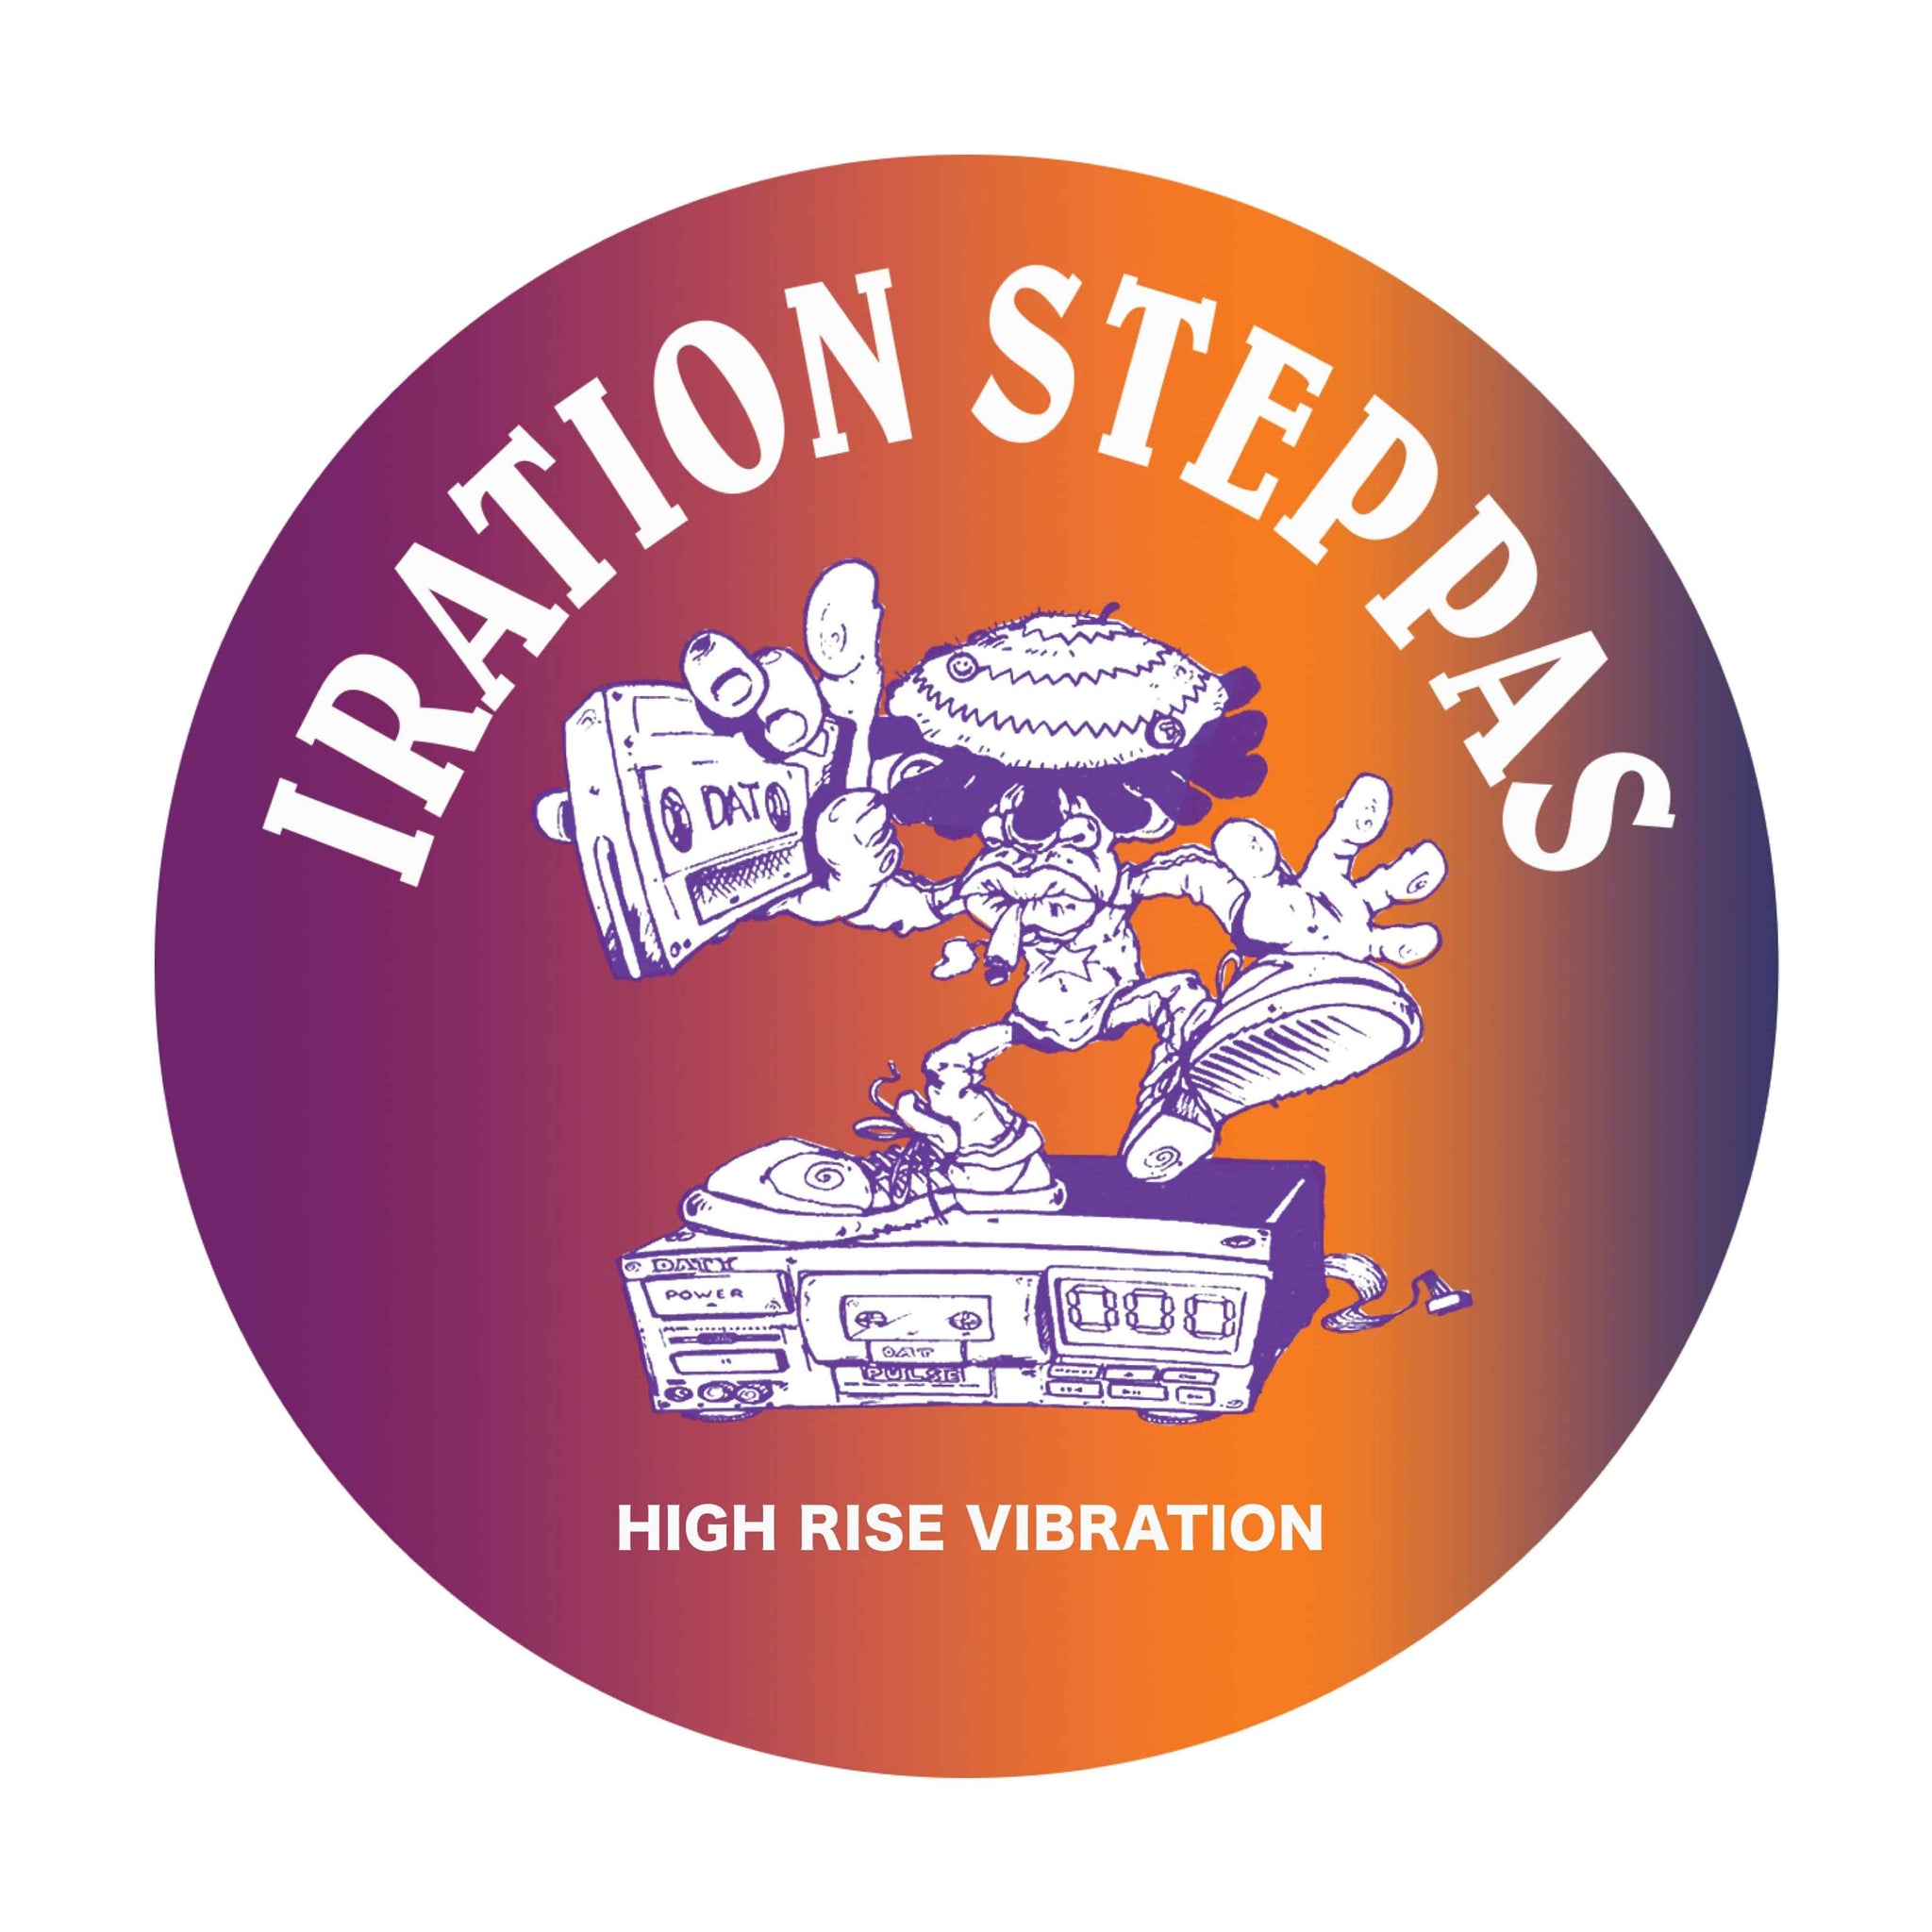 Iration Steppas - High Rise Vibrations